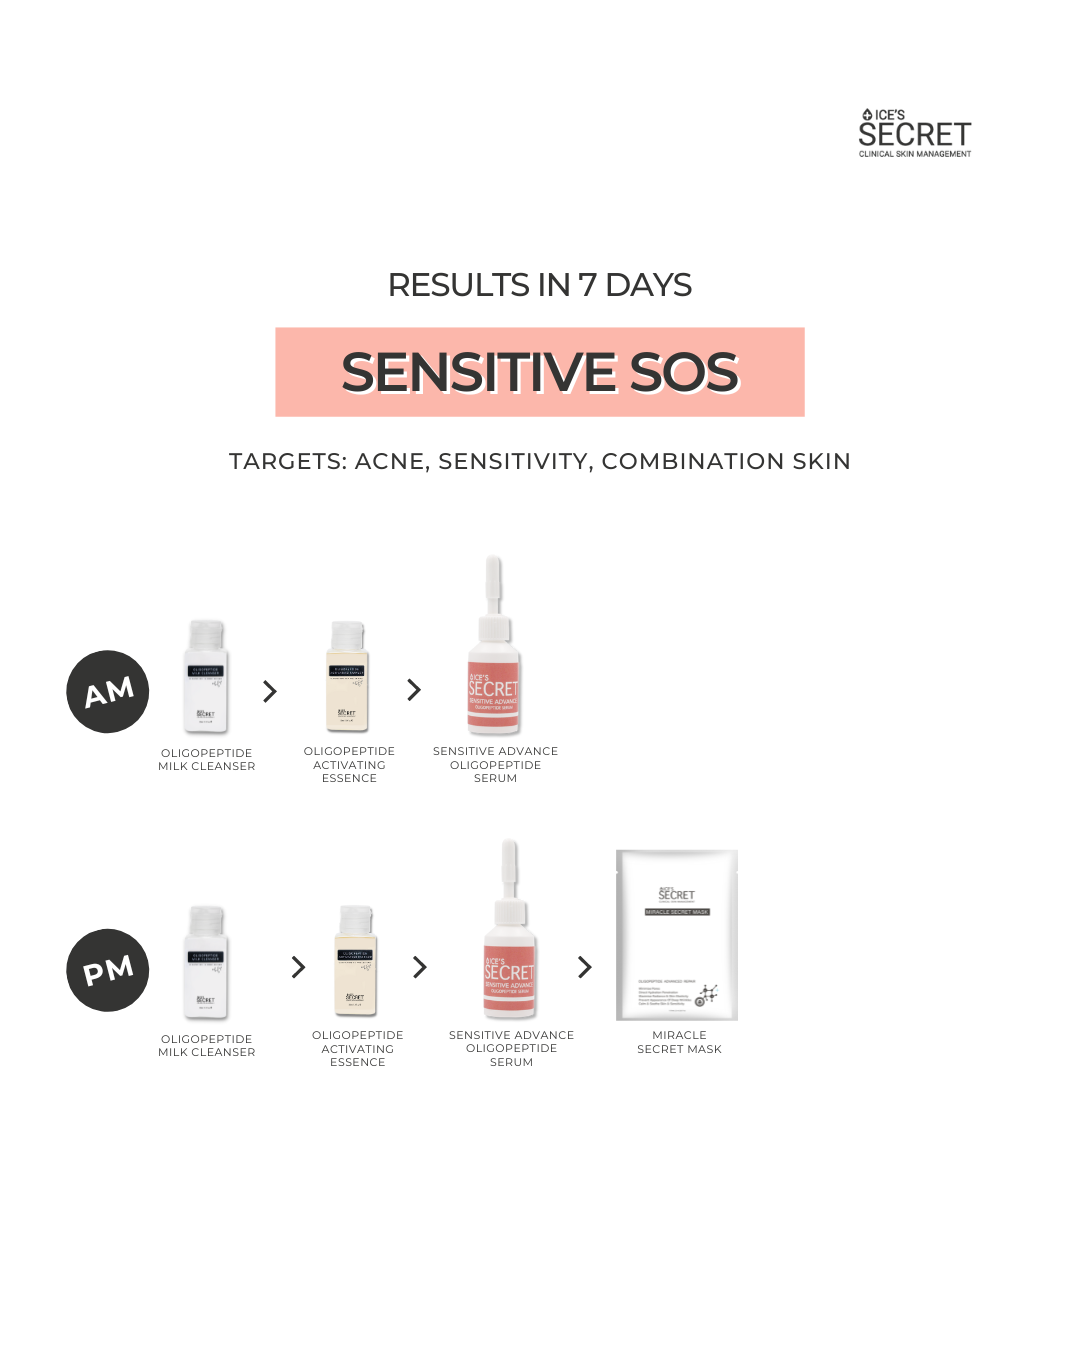 Sensitive SOS Kit